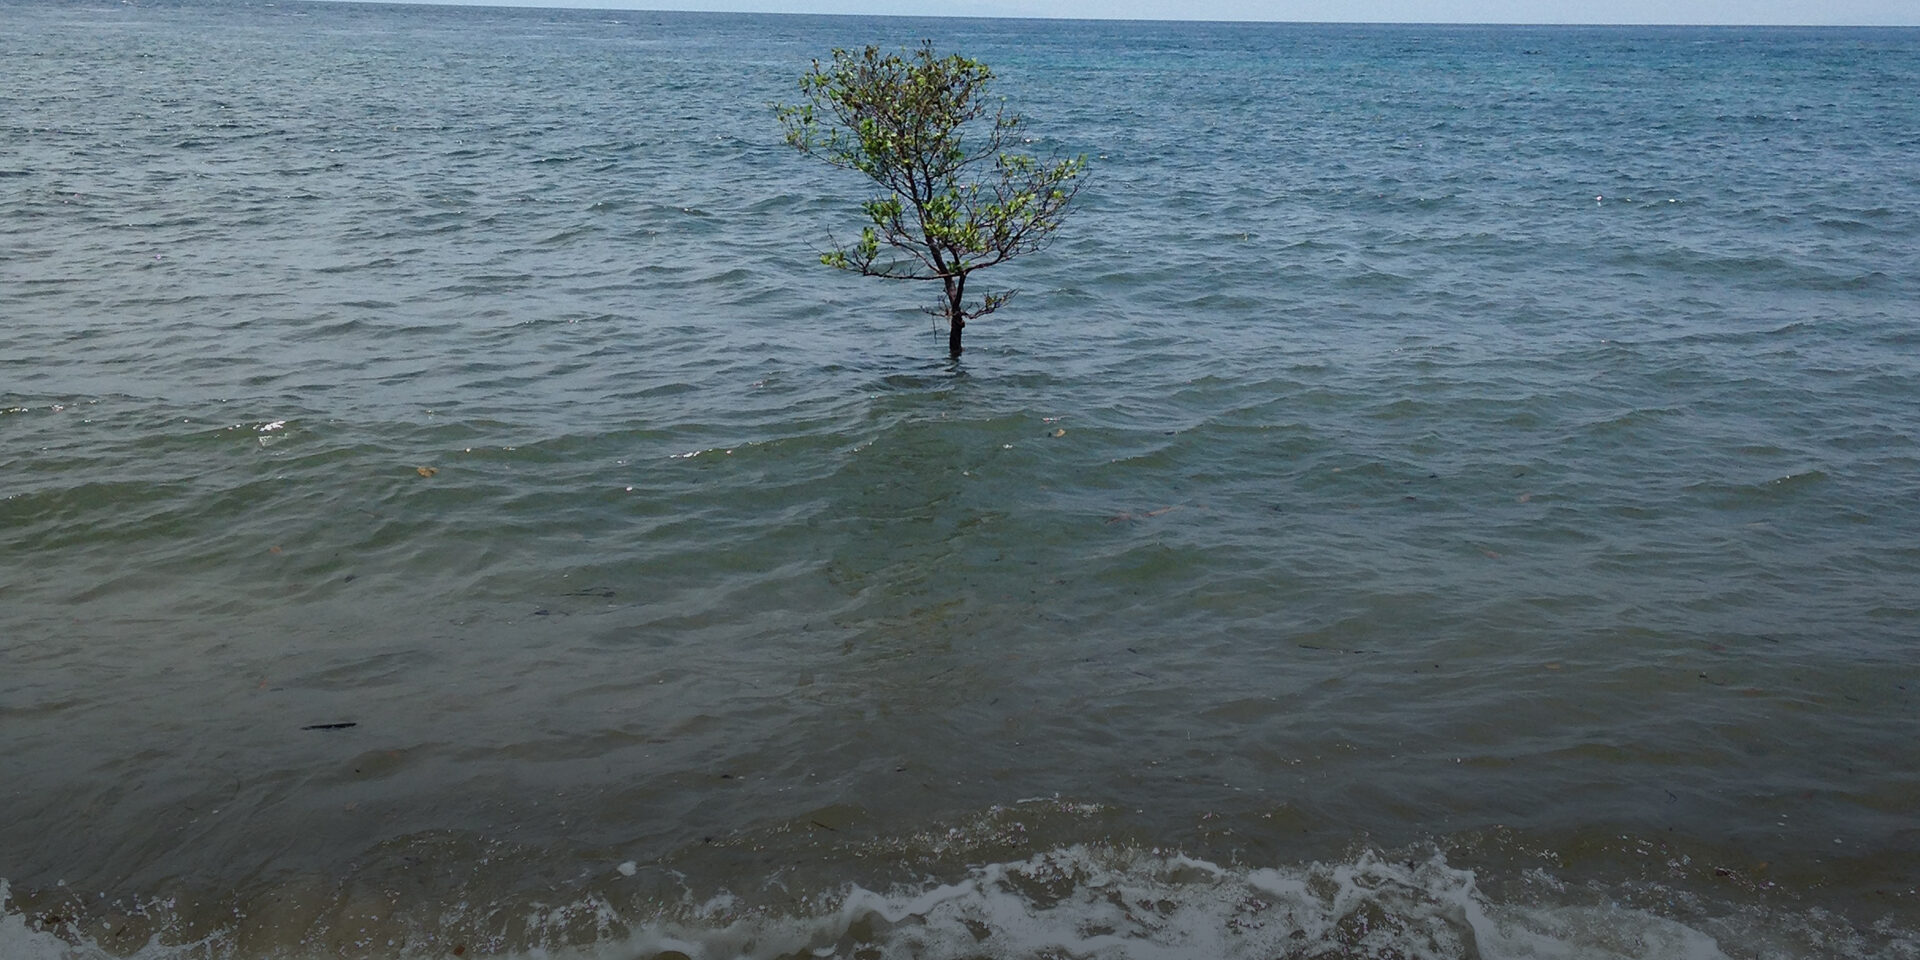 Ocean water surround a tree